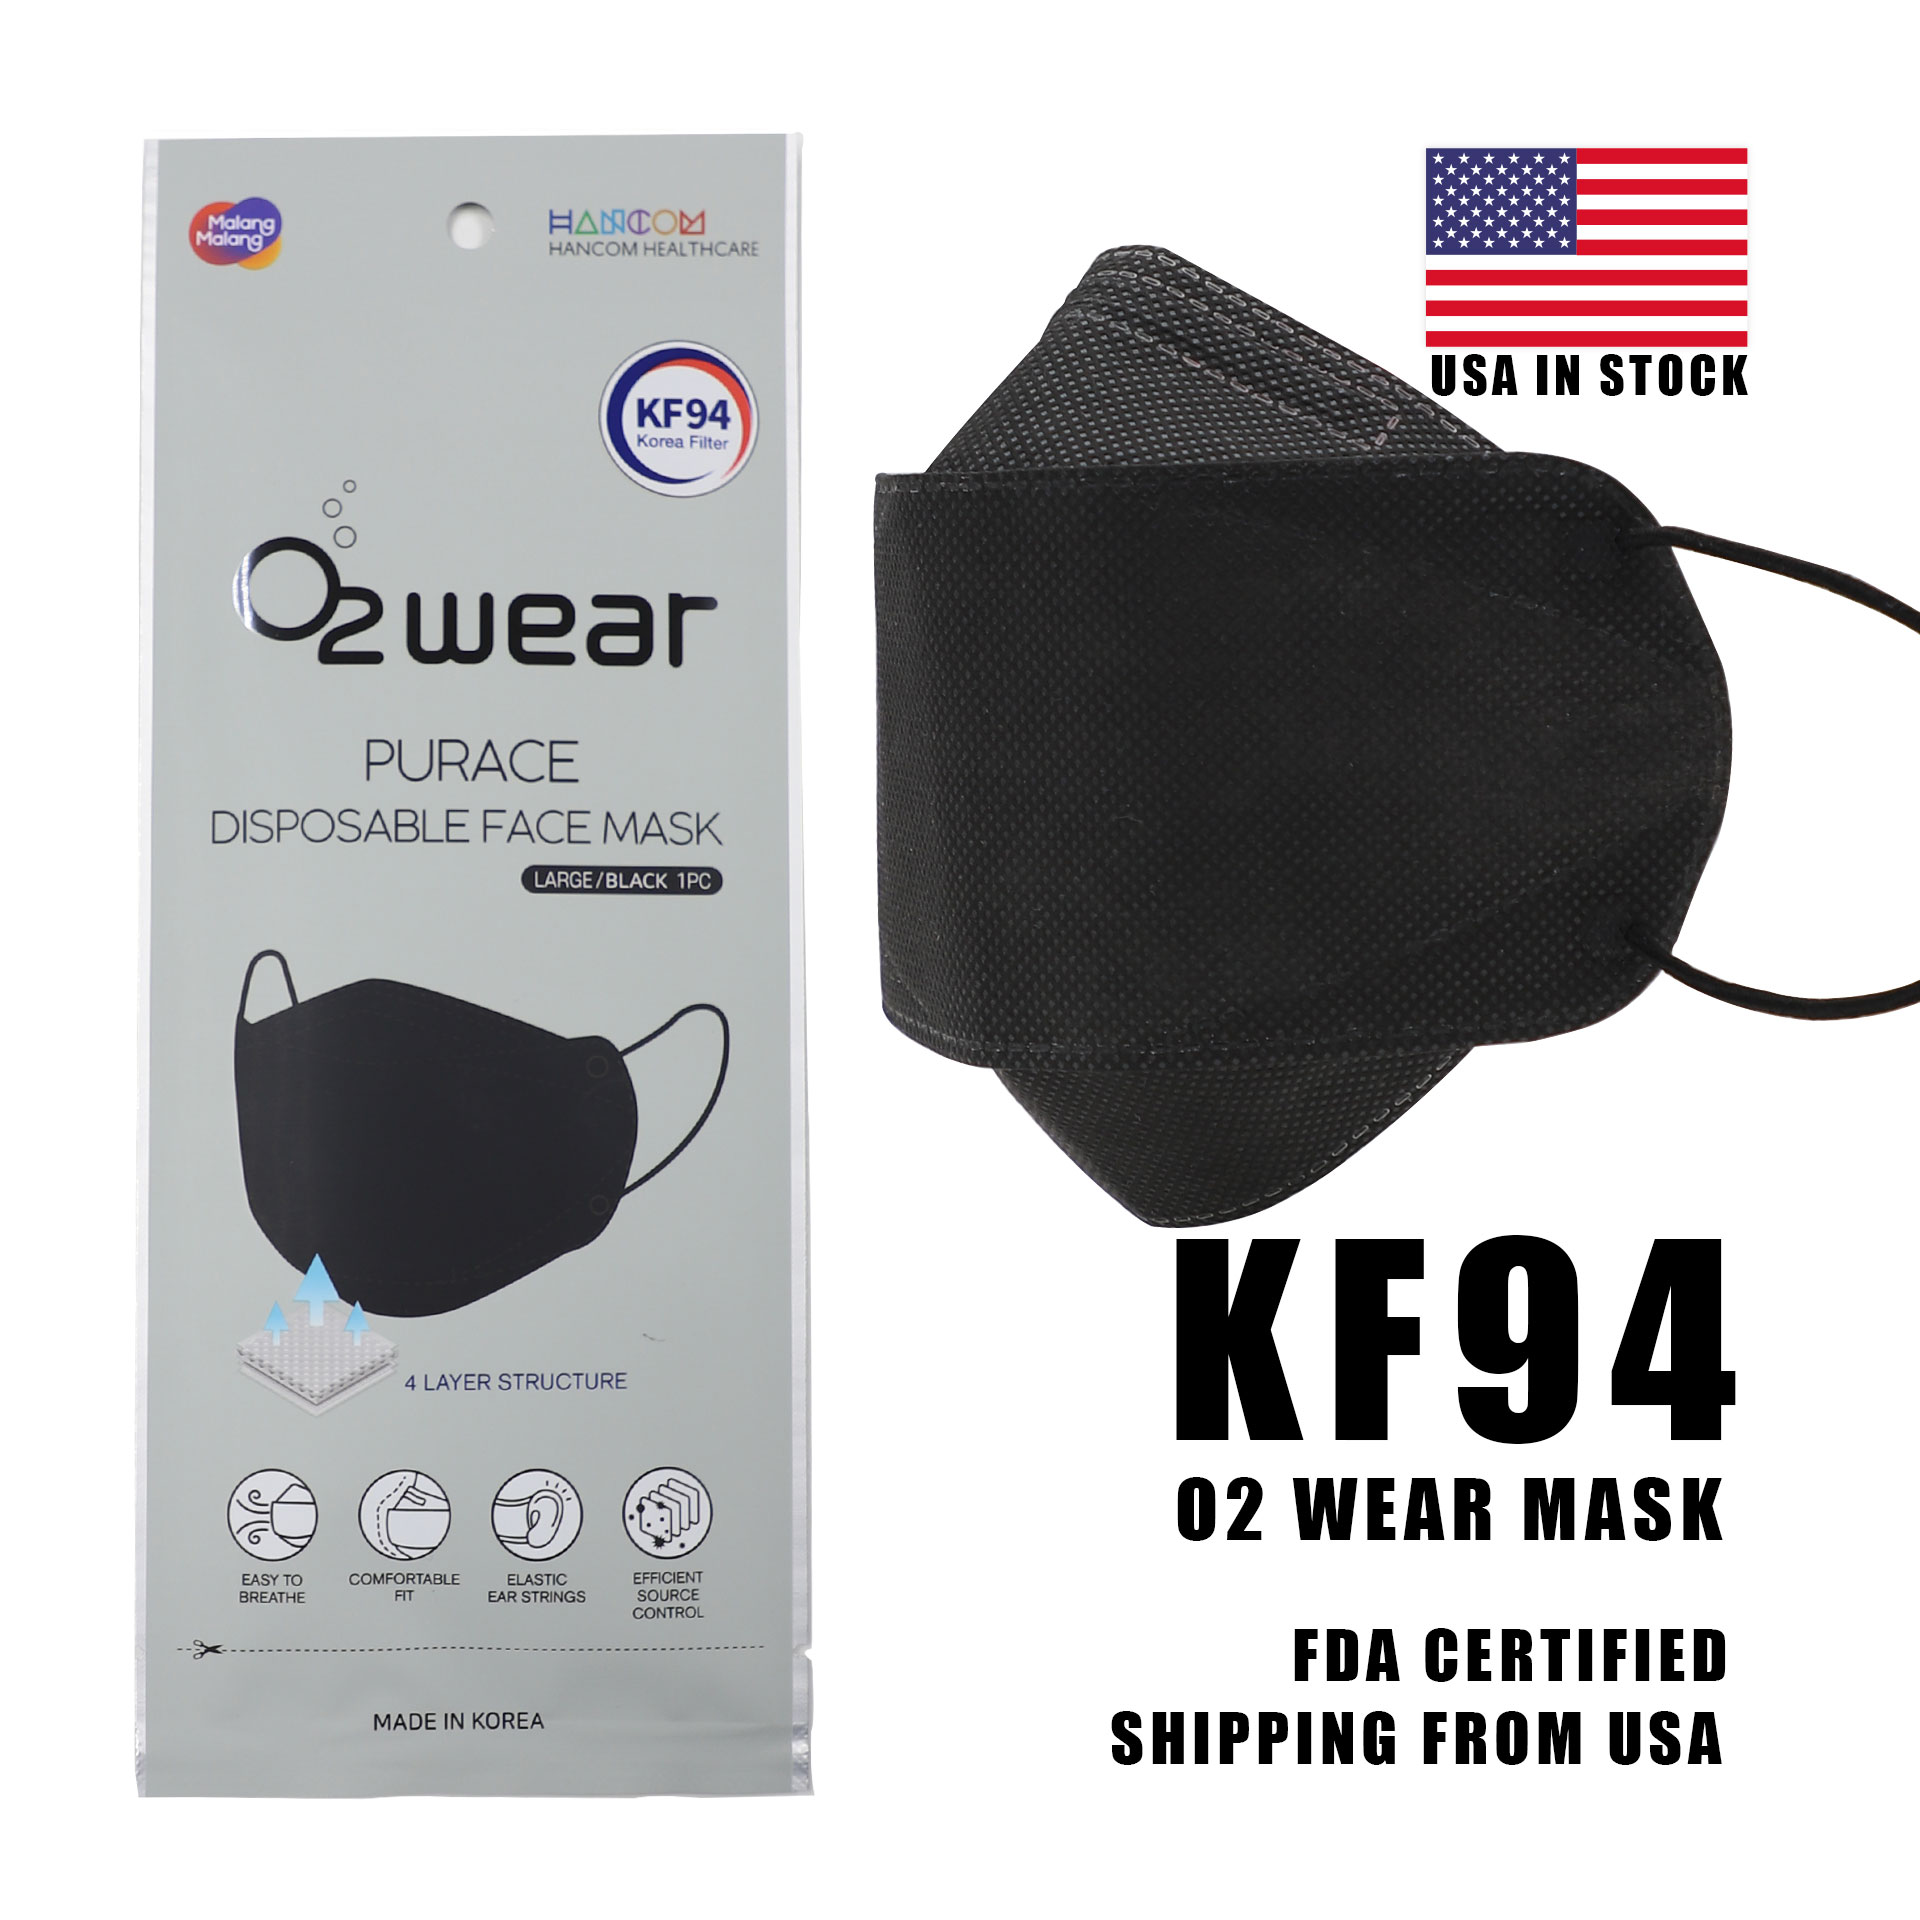 KF94 O2 Wear Black Respiratory Mask - FDA Approved N95 Level Mask. 